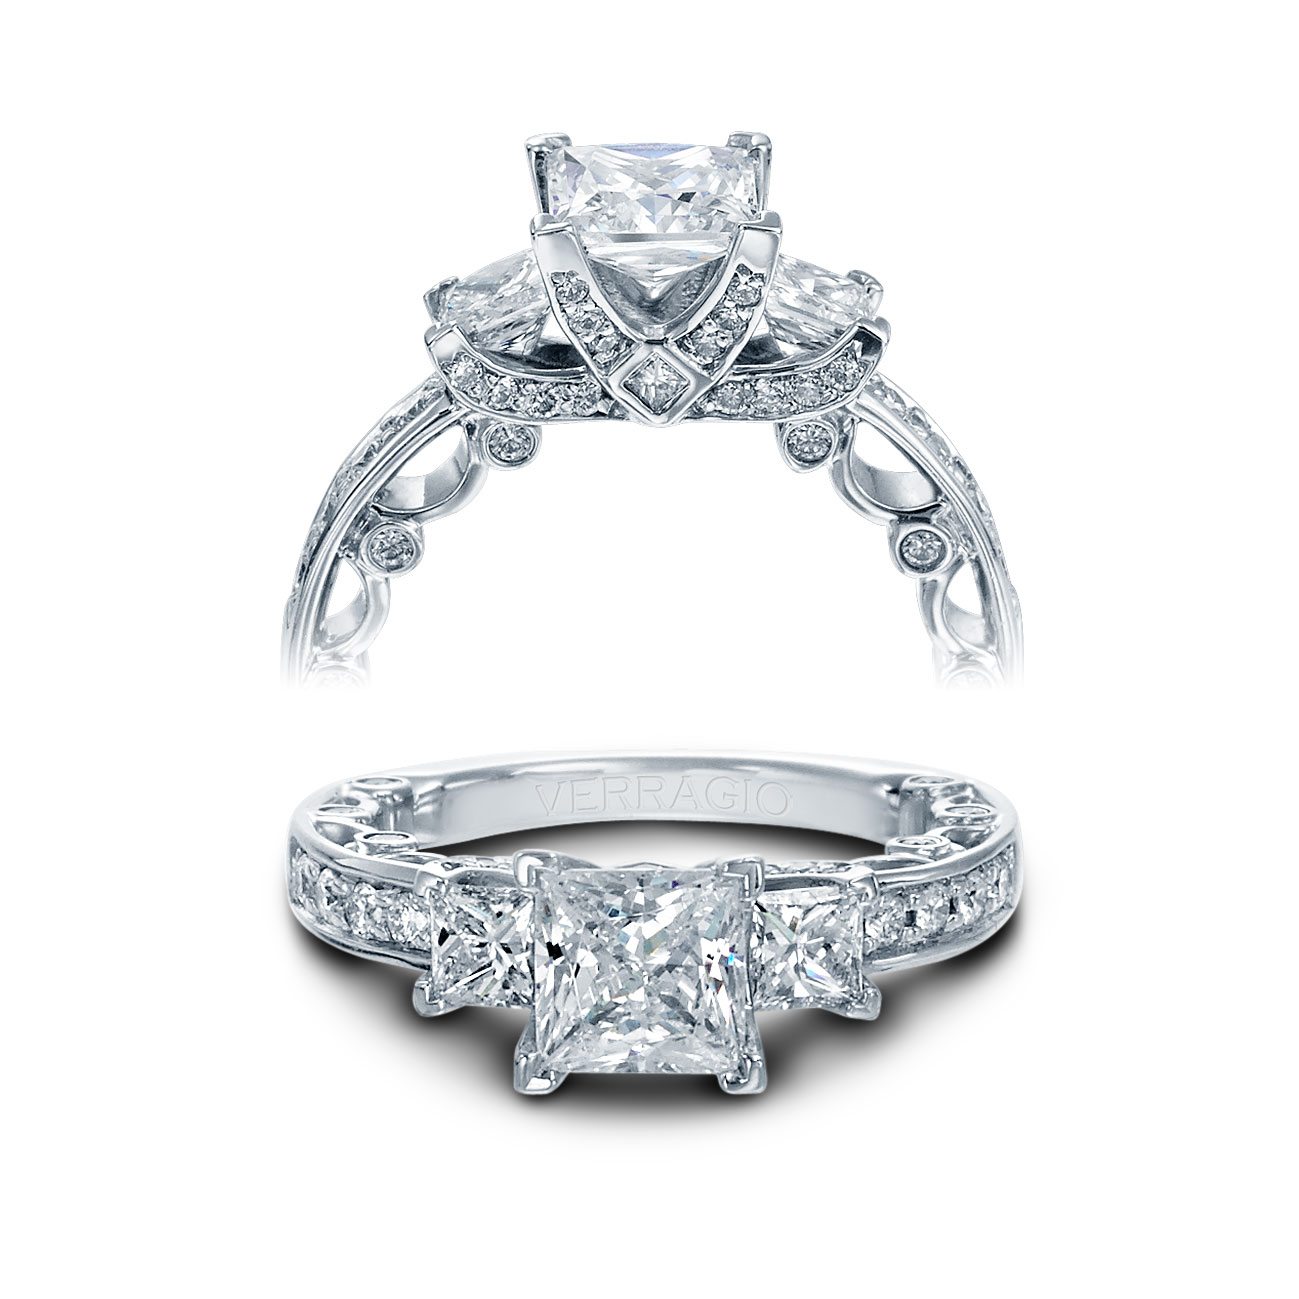 Ezquisiste Diamond Ring by Verragio!